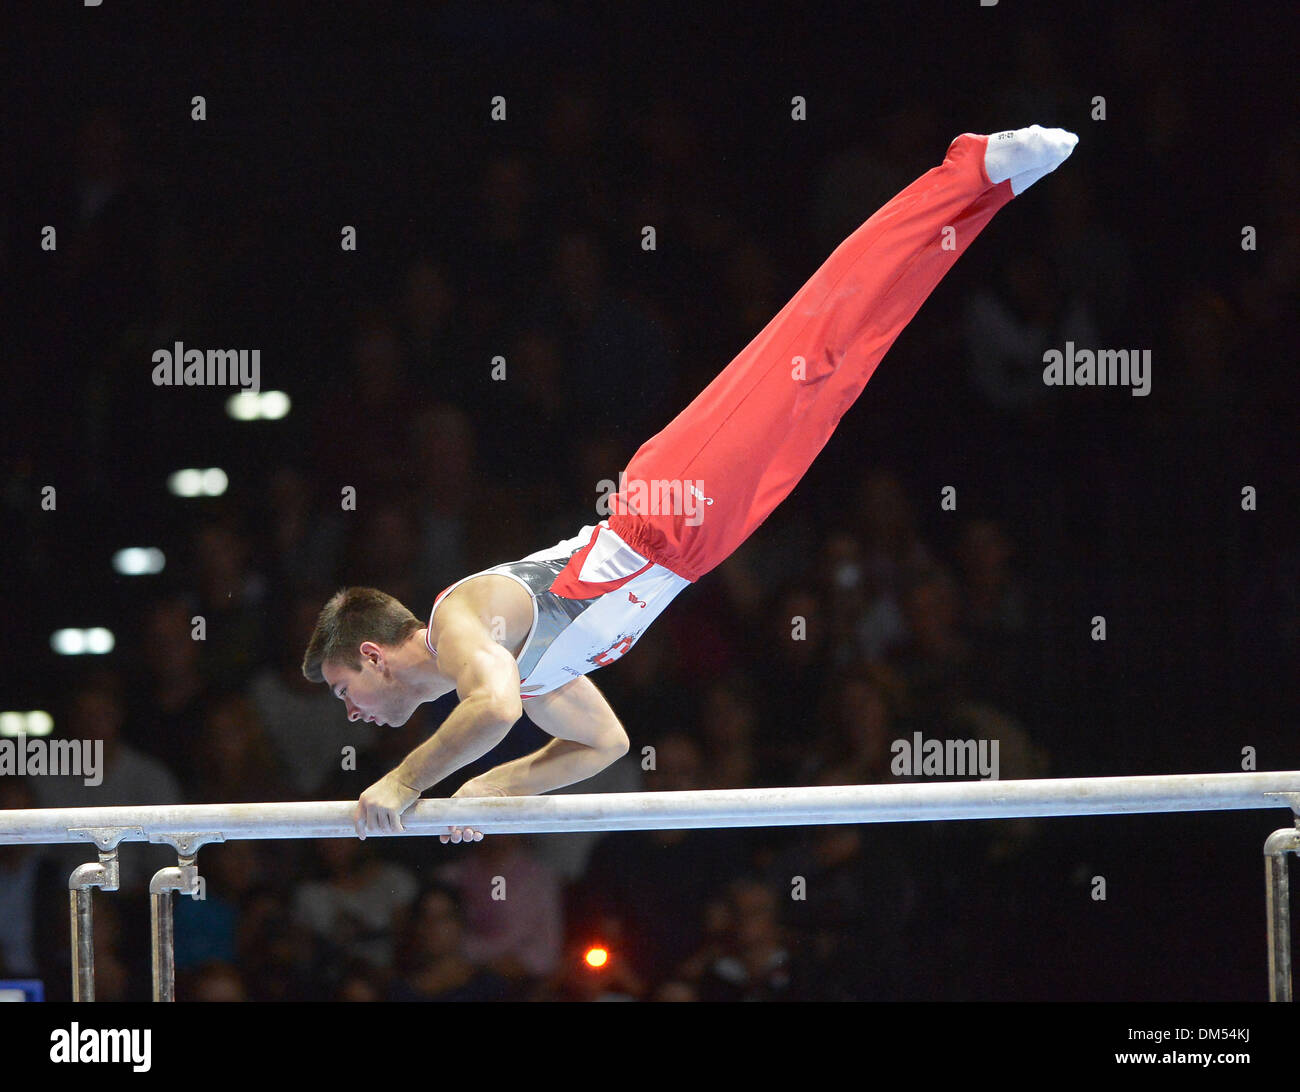 Gymnastics, artistic gymastics, sport, Zurich, ingot, Oliver Heri, competition, top-class, no model release, Stock Photo